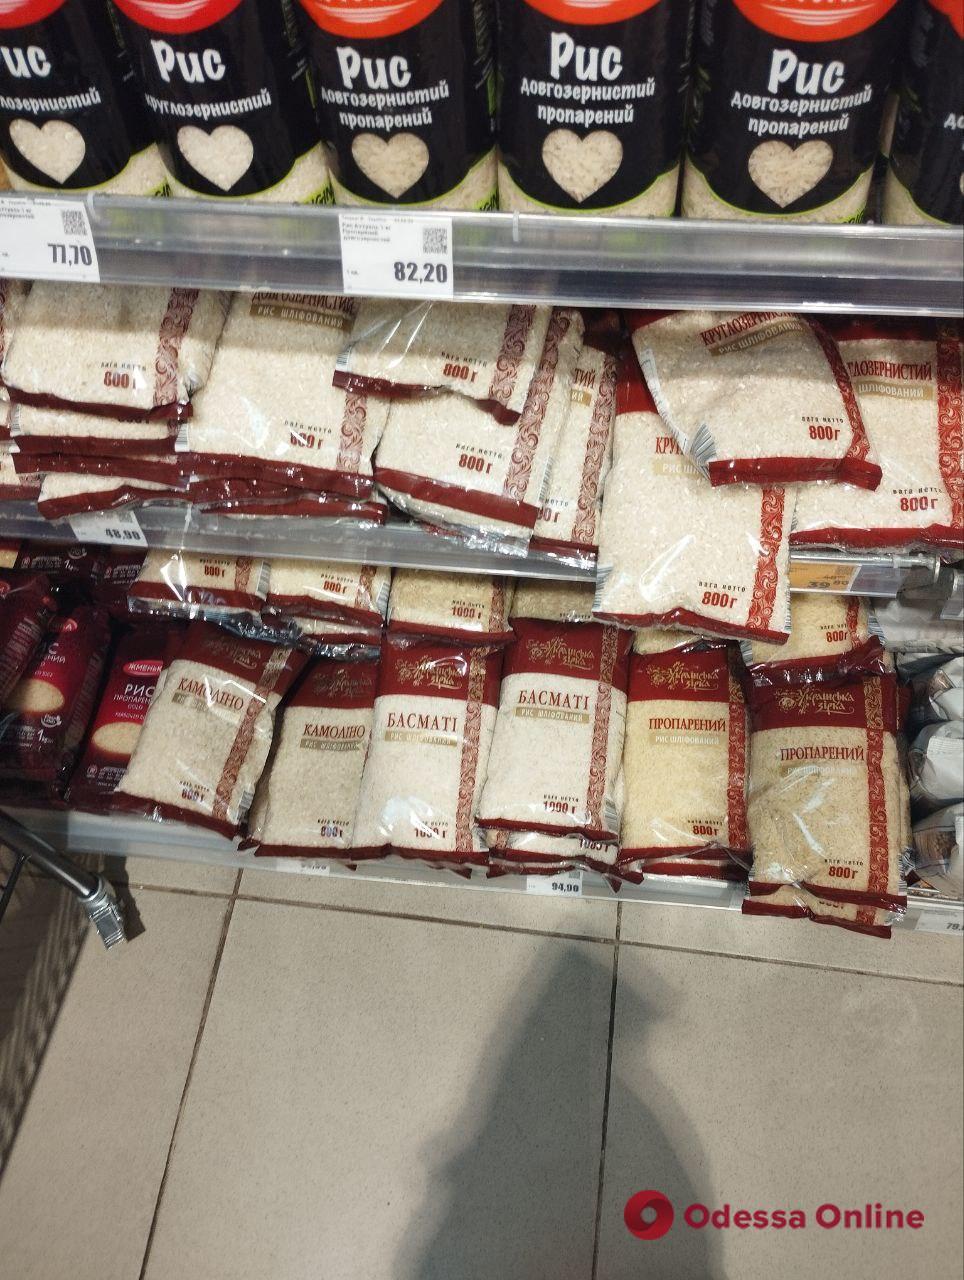 Сливочное масло, сахар и рис: обзор цен в одесских супермаркетах